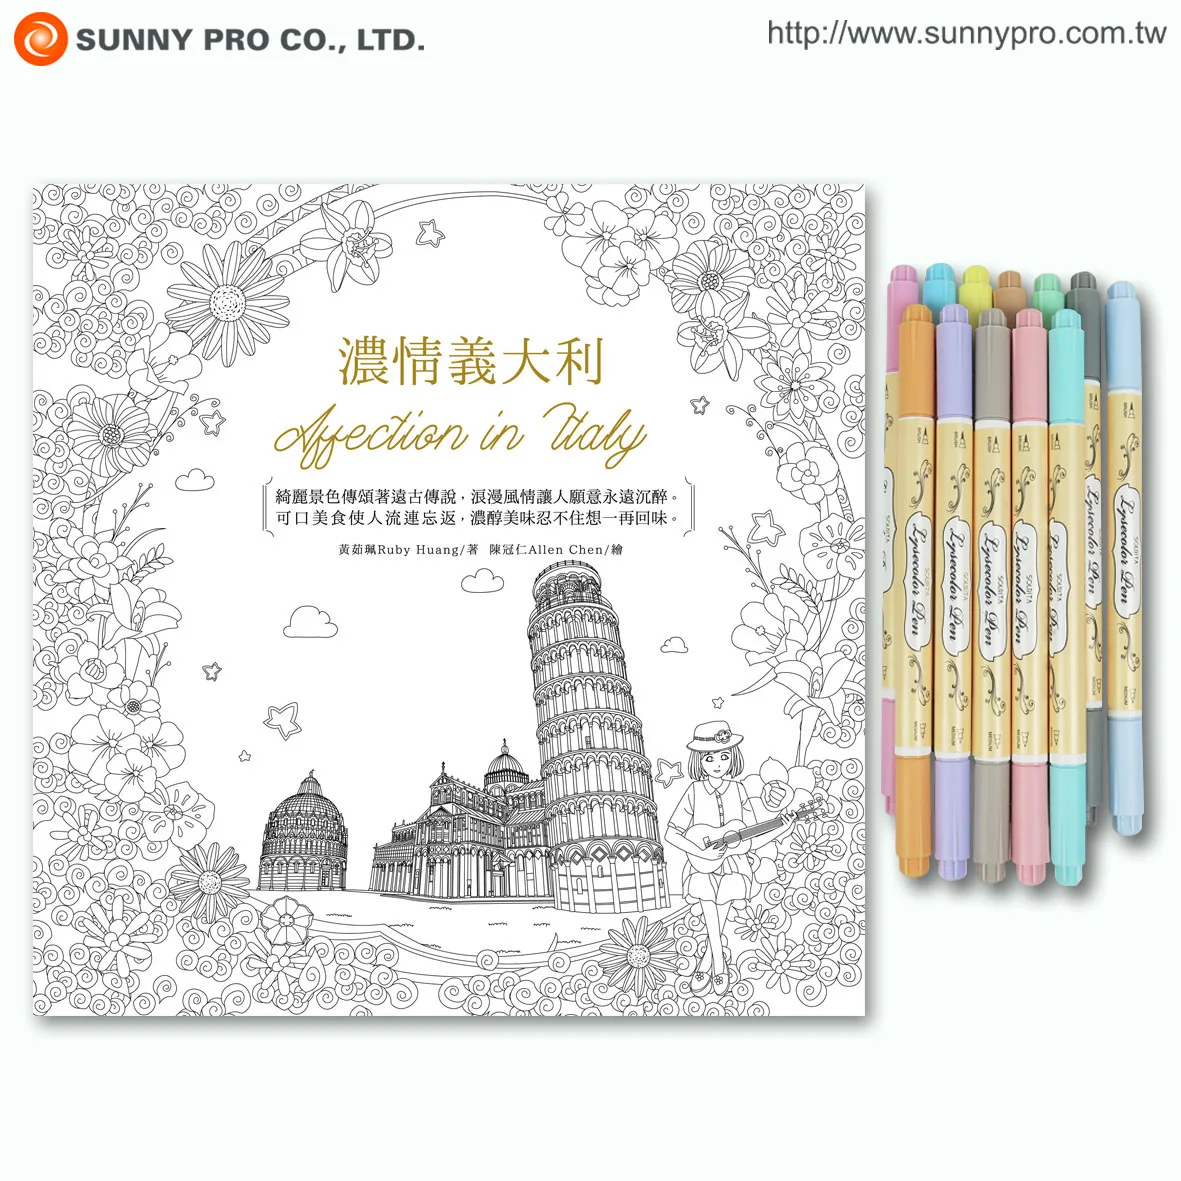 Cute Colors Pen Watercolor Adult Coloring Book Set Buy Coloring Book Set Adult Coloring Book Set Watercolor Coloring Book Product On Alibaba Com